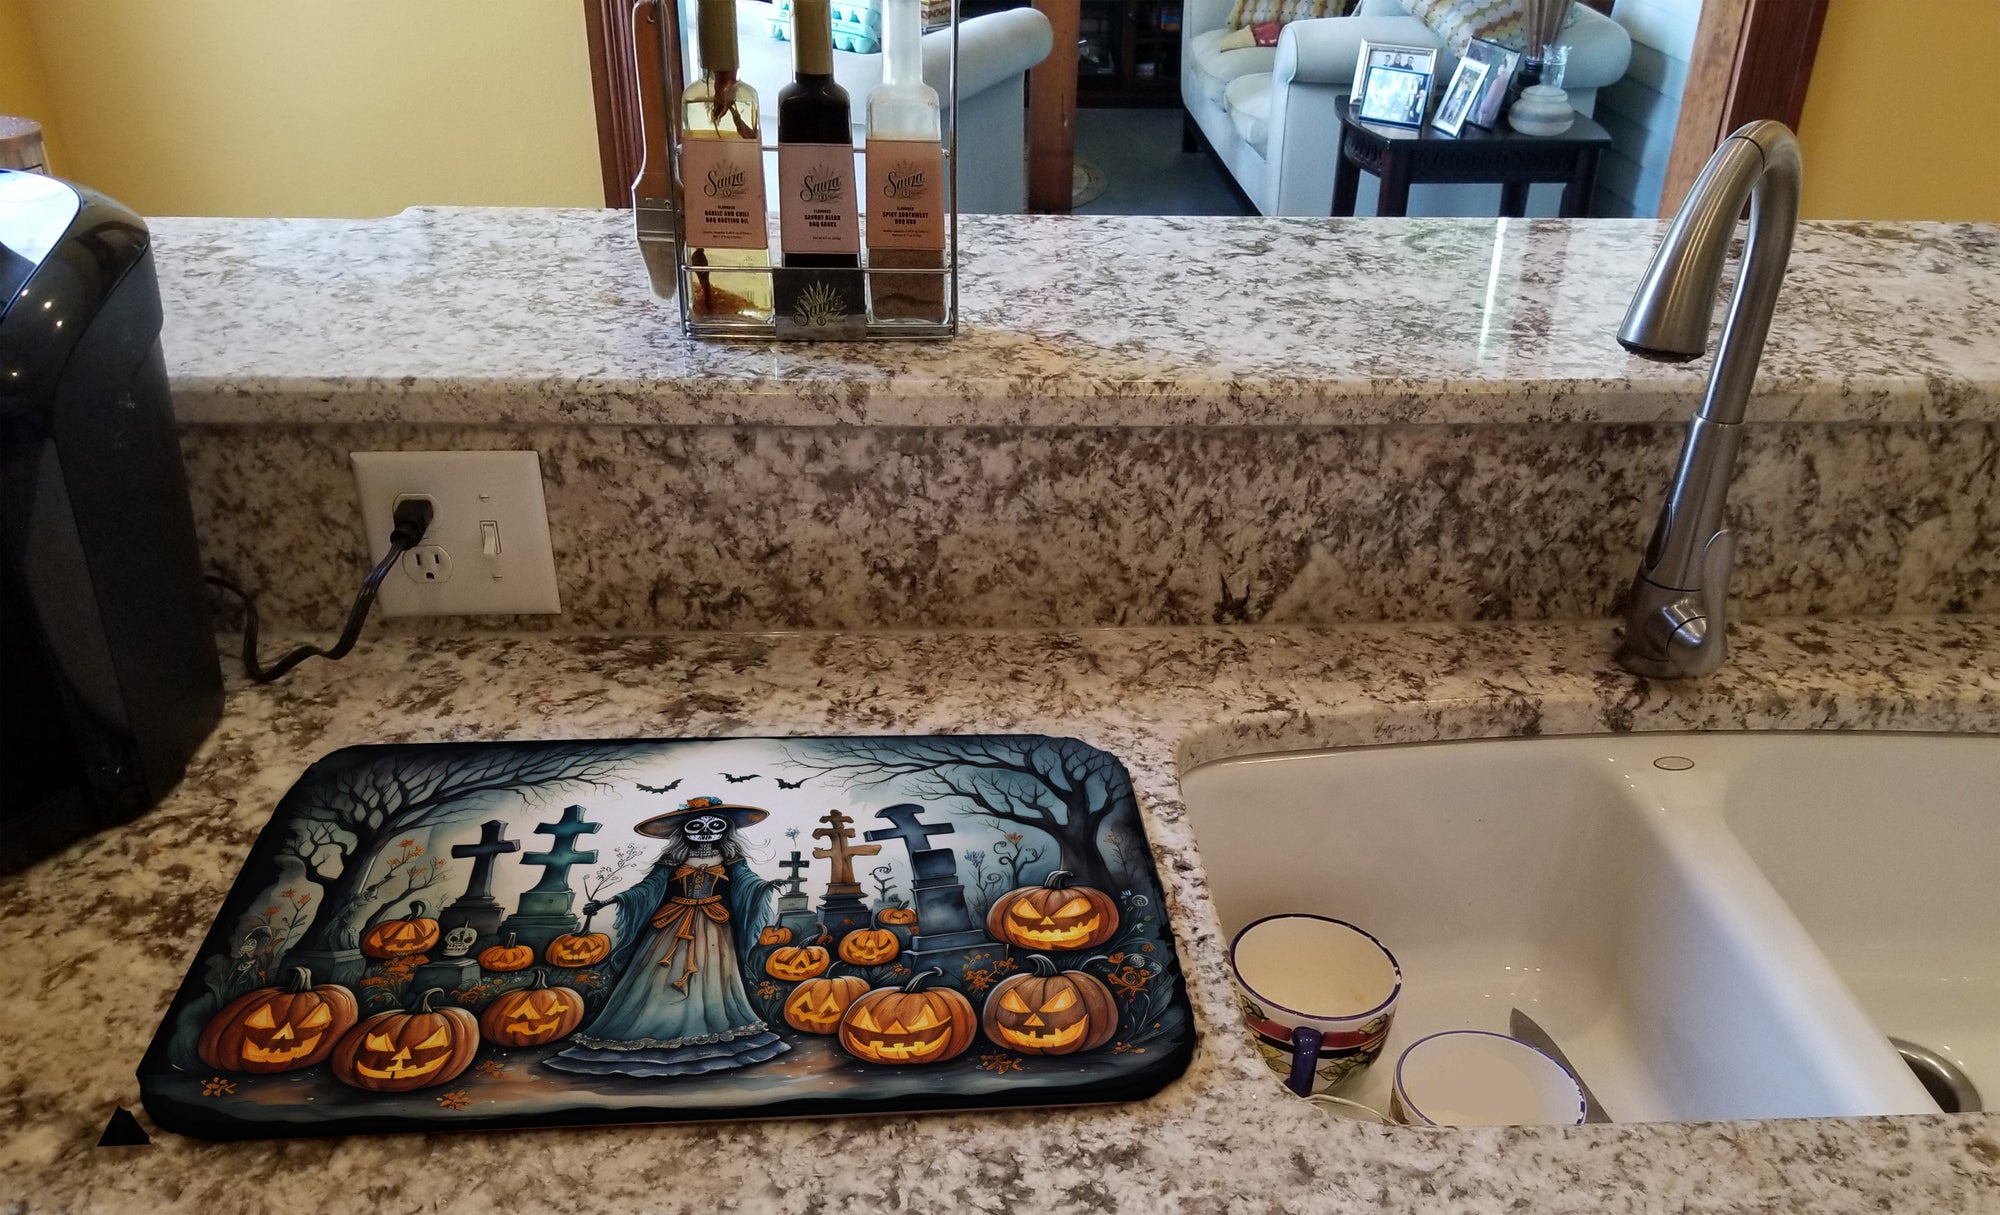 Buy this La Catrina Skeleton Spooky Halloween Dish Drying Mat